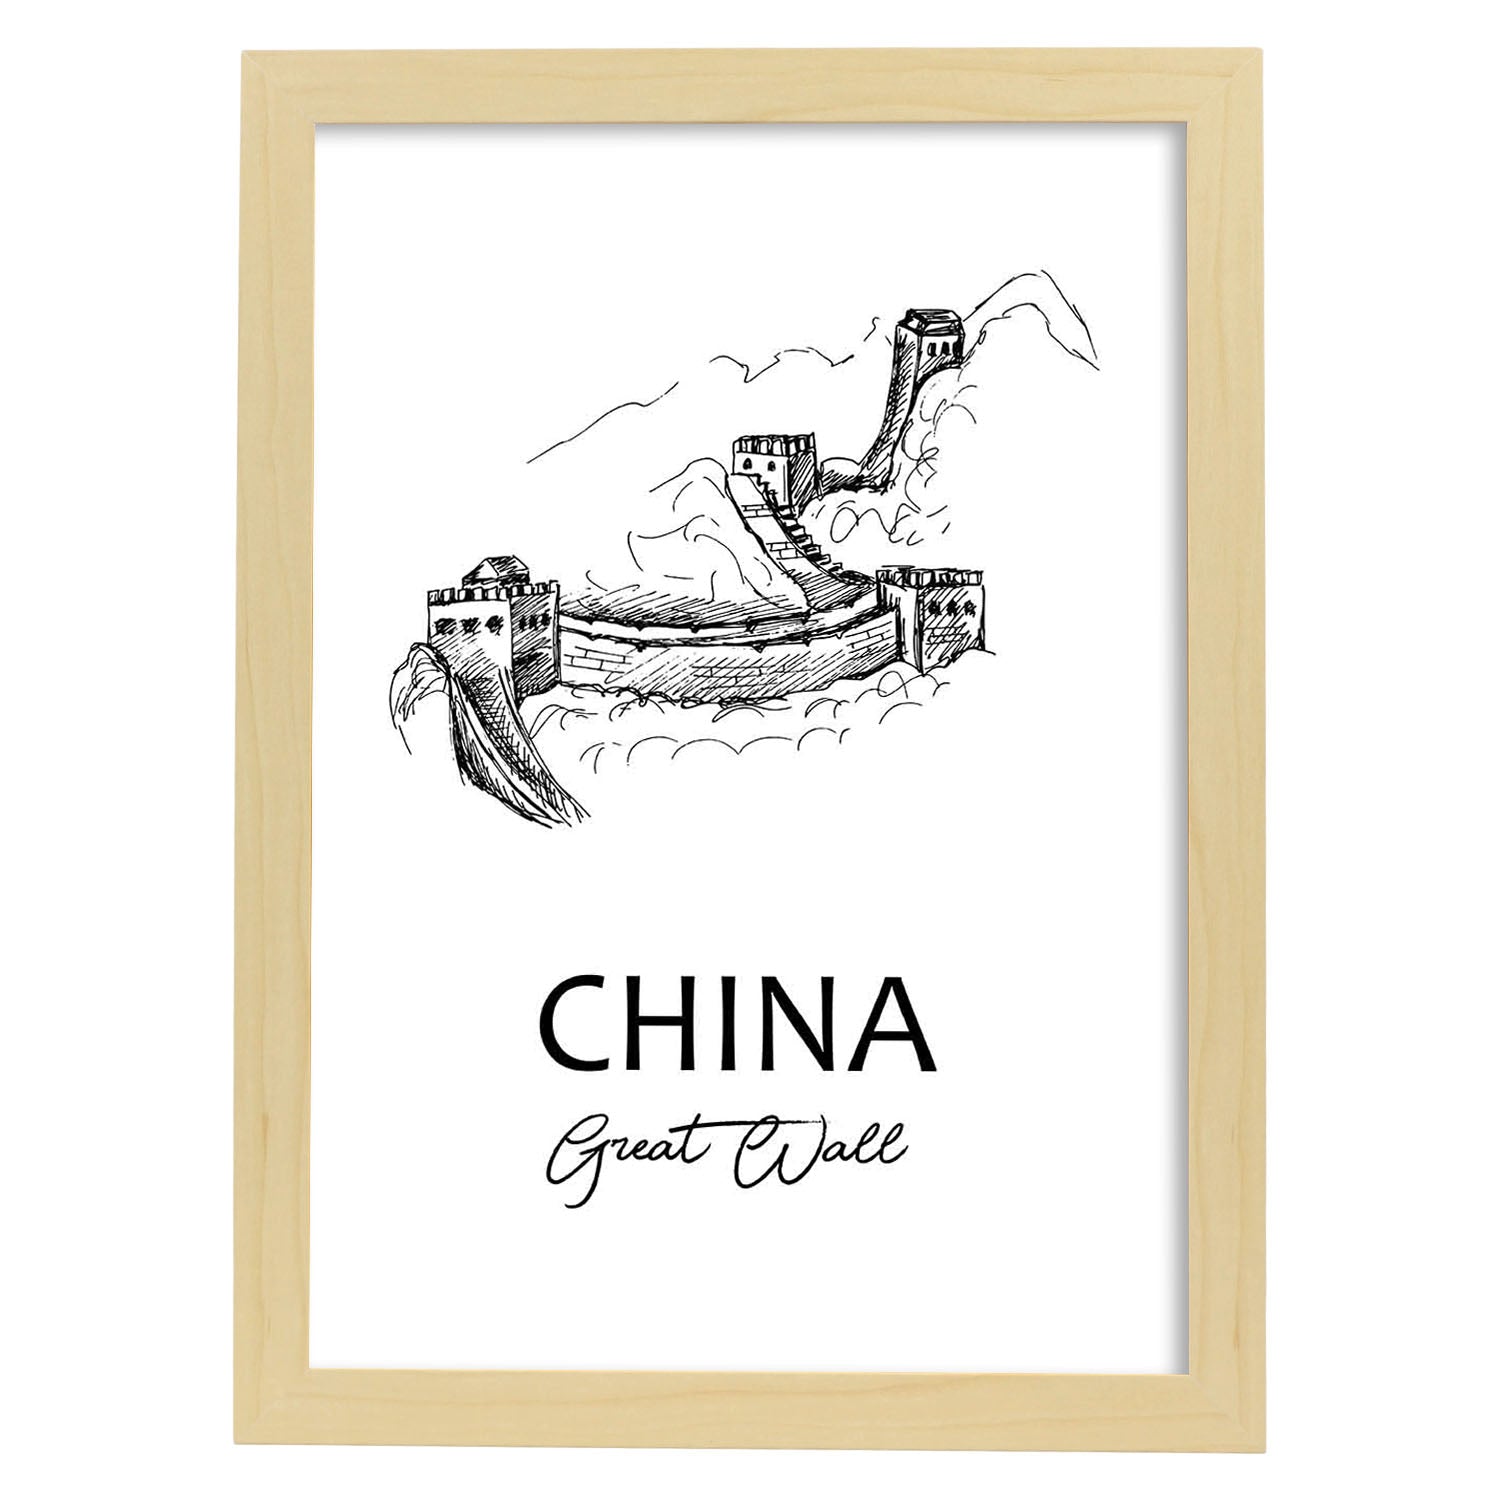 Poster de China - La gran muralla. Láminas con monumentos de ciudades.-Artwork-Nacnic-A3-Marco Madera clara-Nacnic Estudio SL